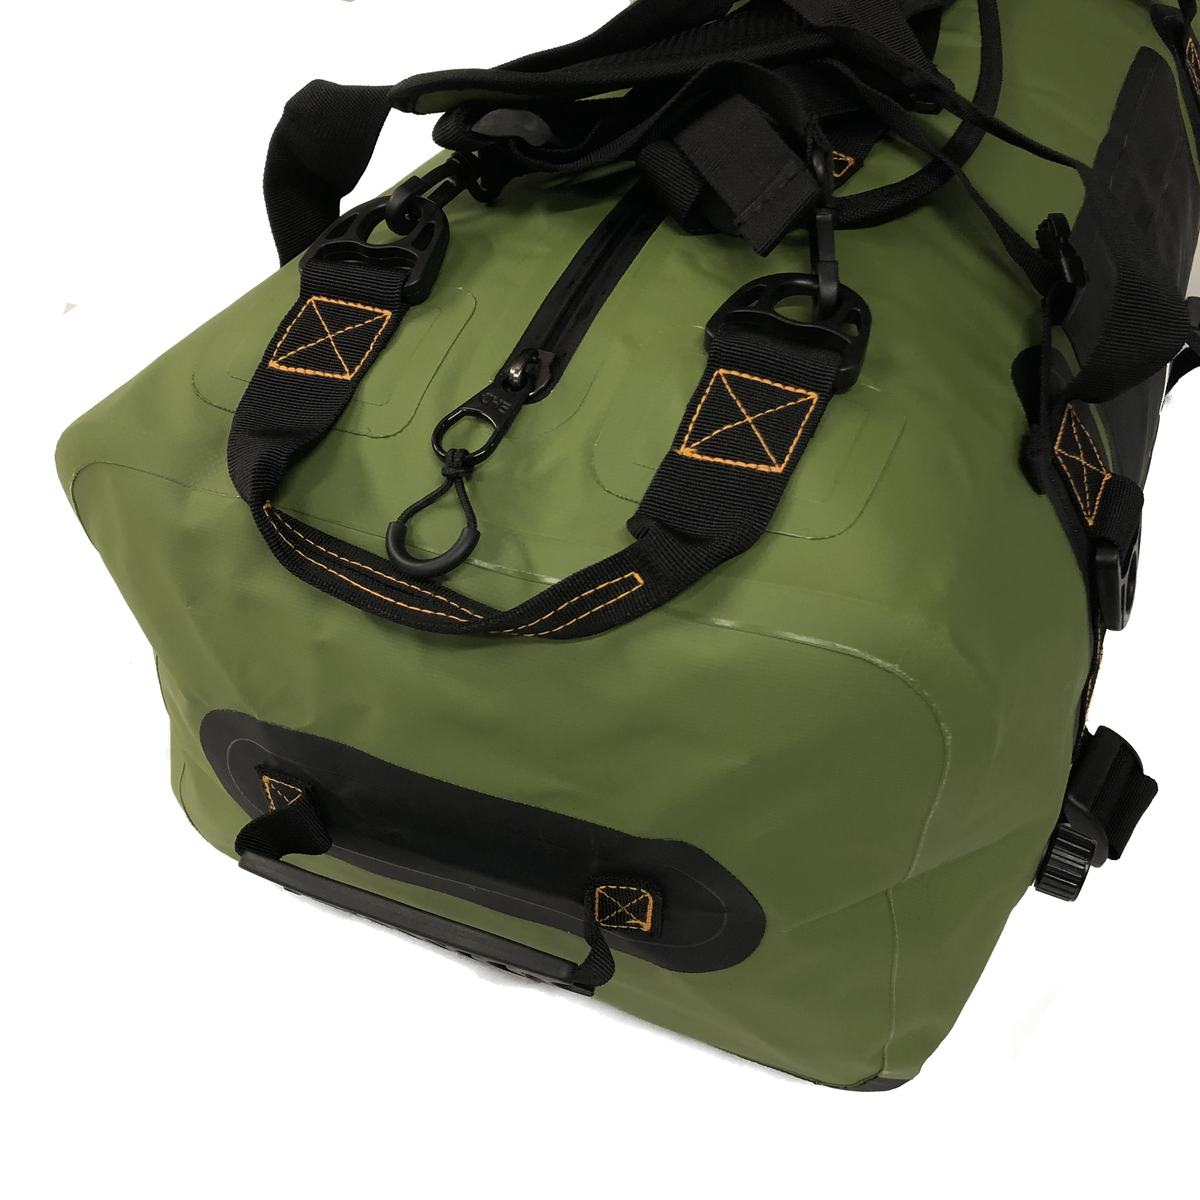 Outcamp waterproof camping bags